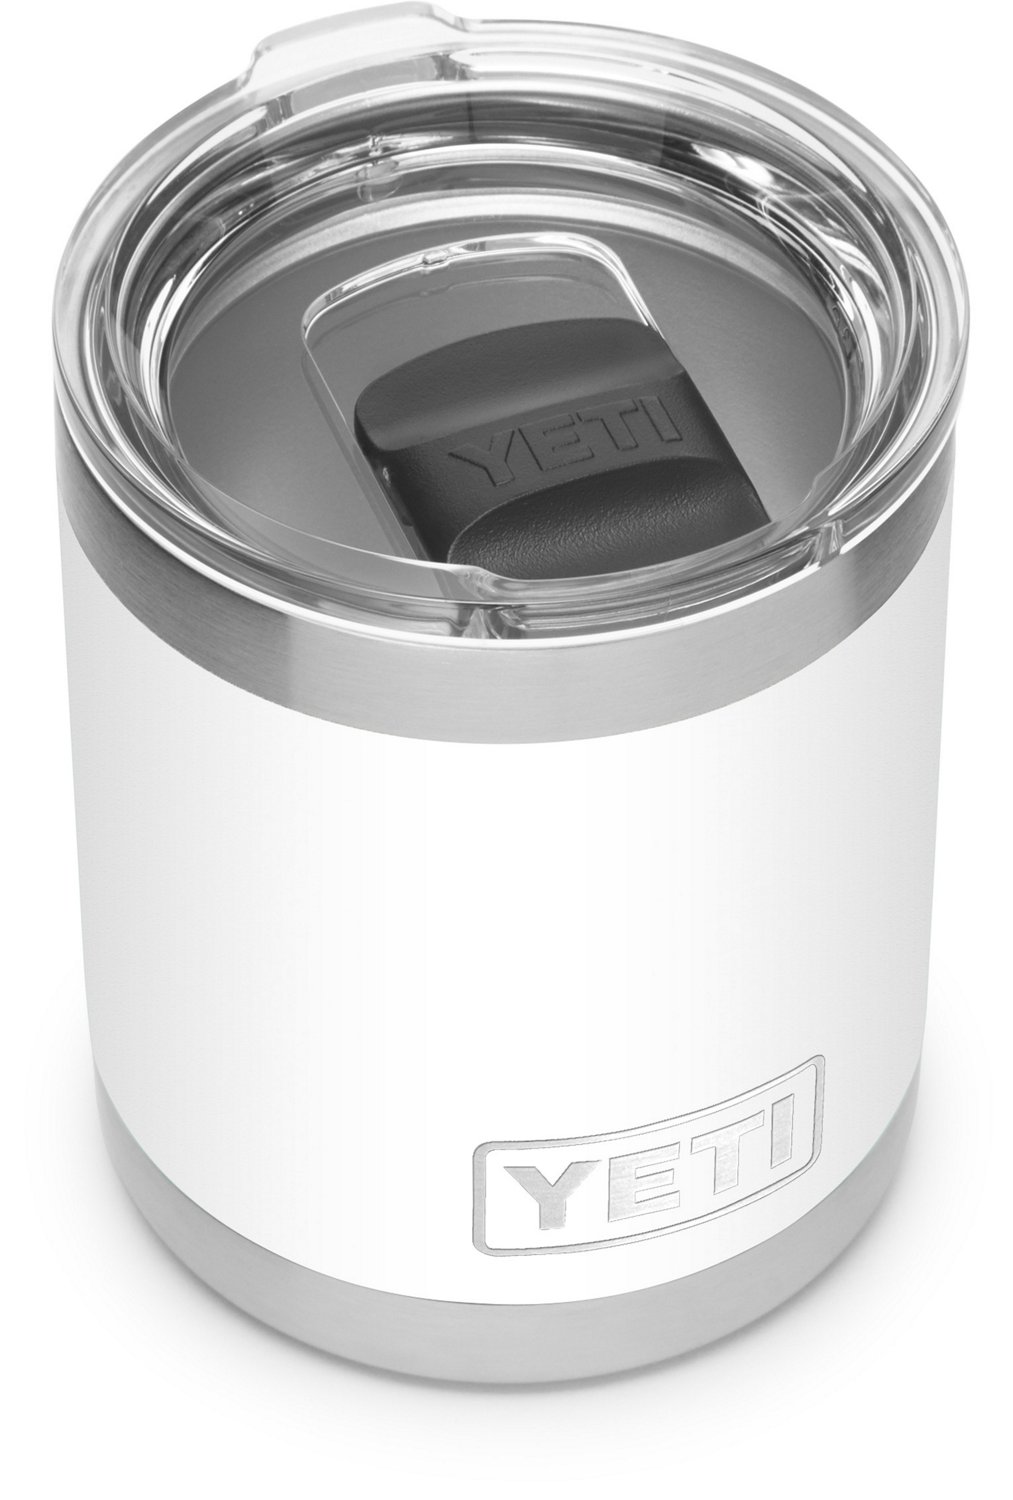 YETI® Rambler Lowball Tumbler – Certified Angus Beef